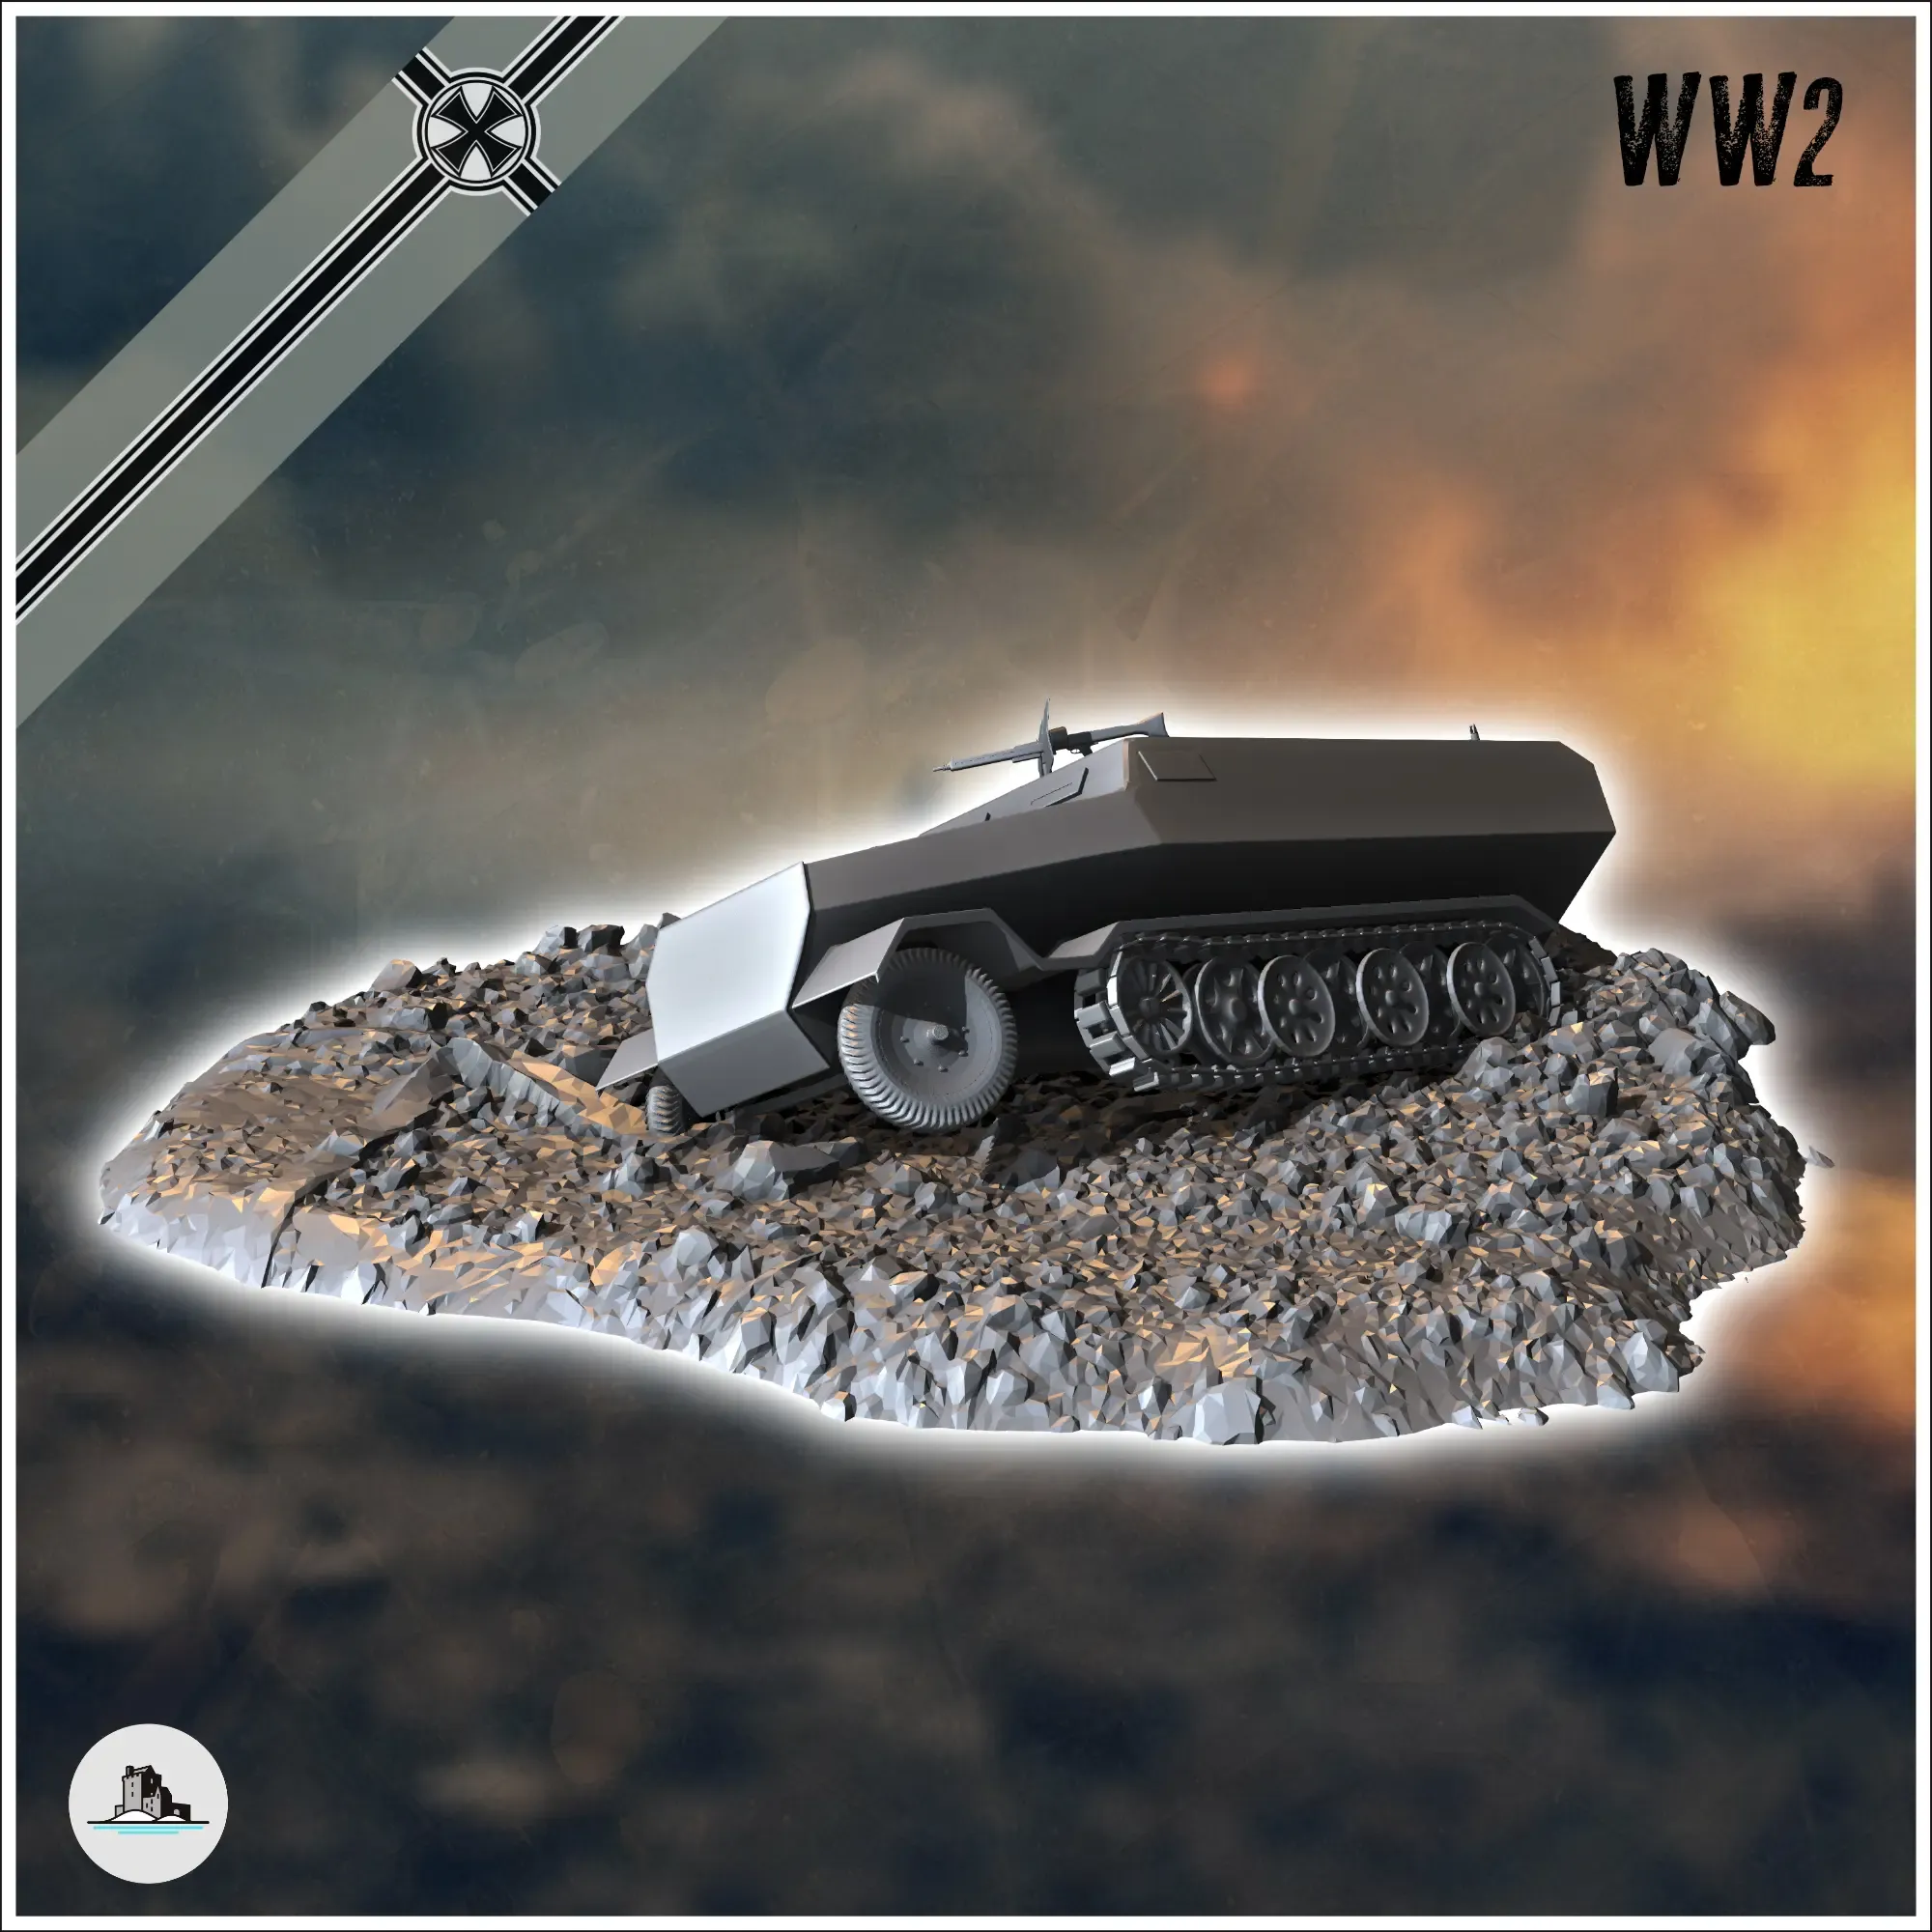 Destroyed German Sd.Kfz. 251 half-track carcass in debris (6